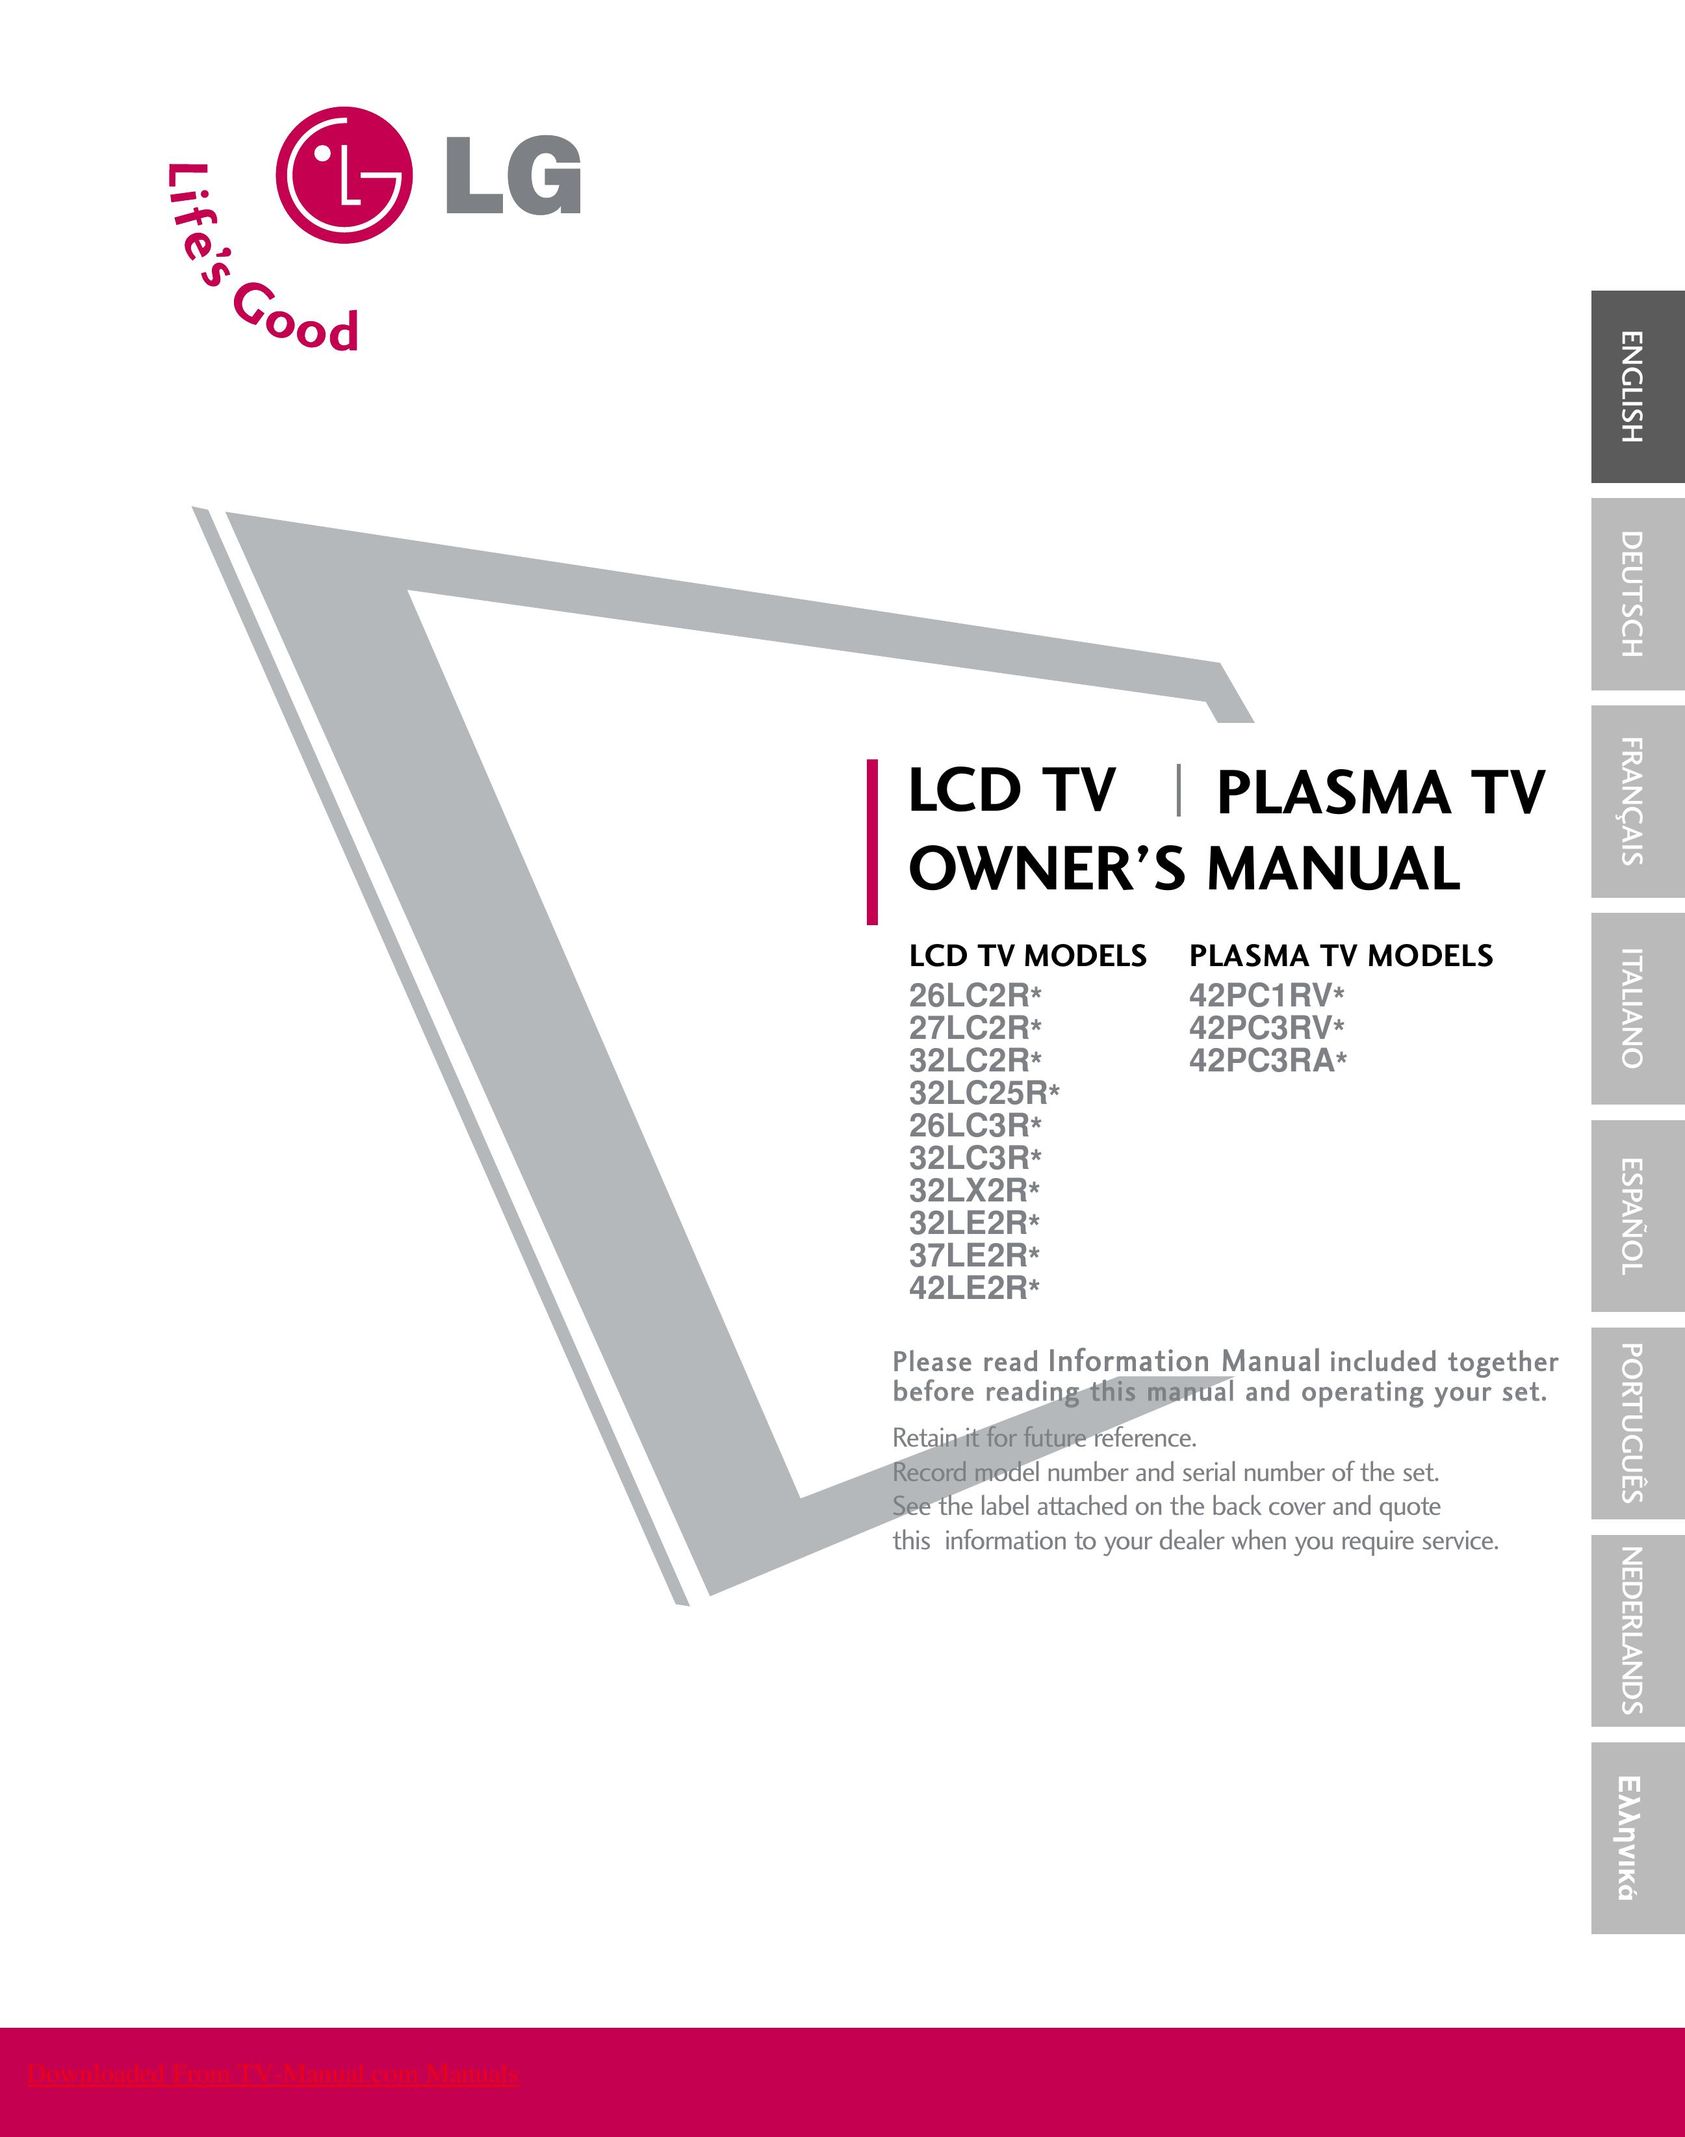 LG Electronics 32LE2R* TV Antenna User Manual